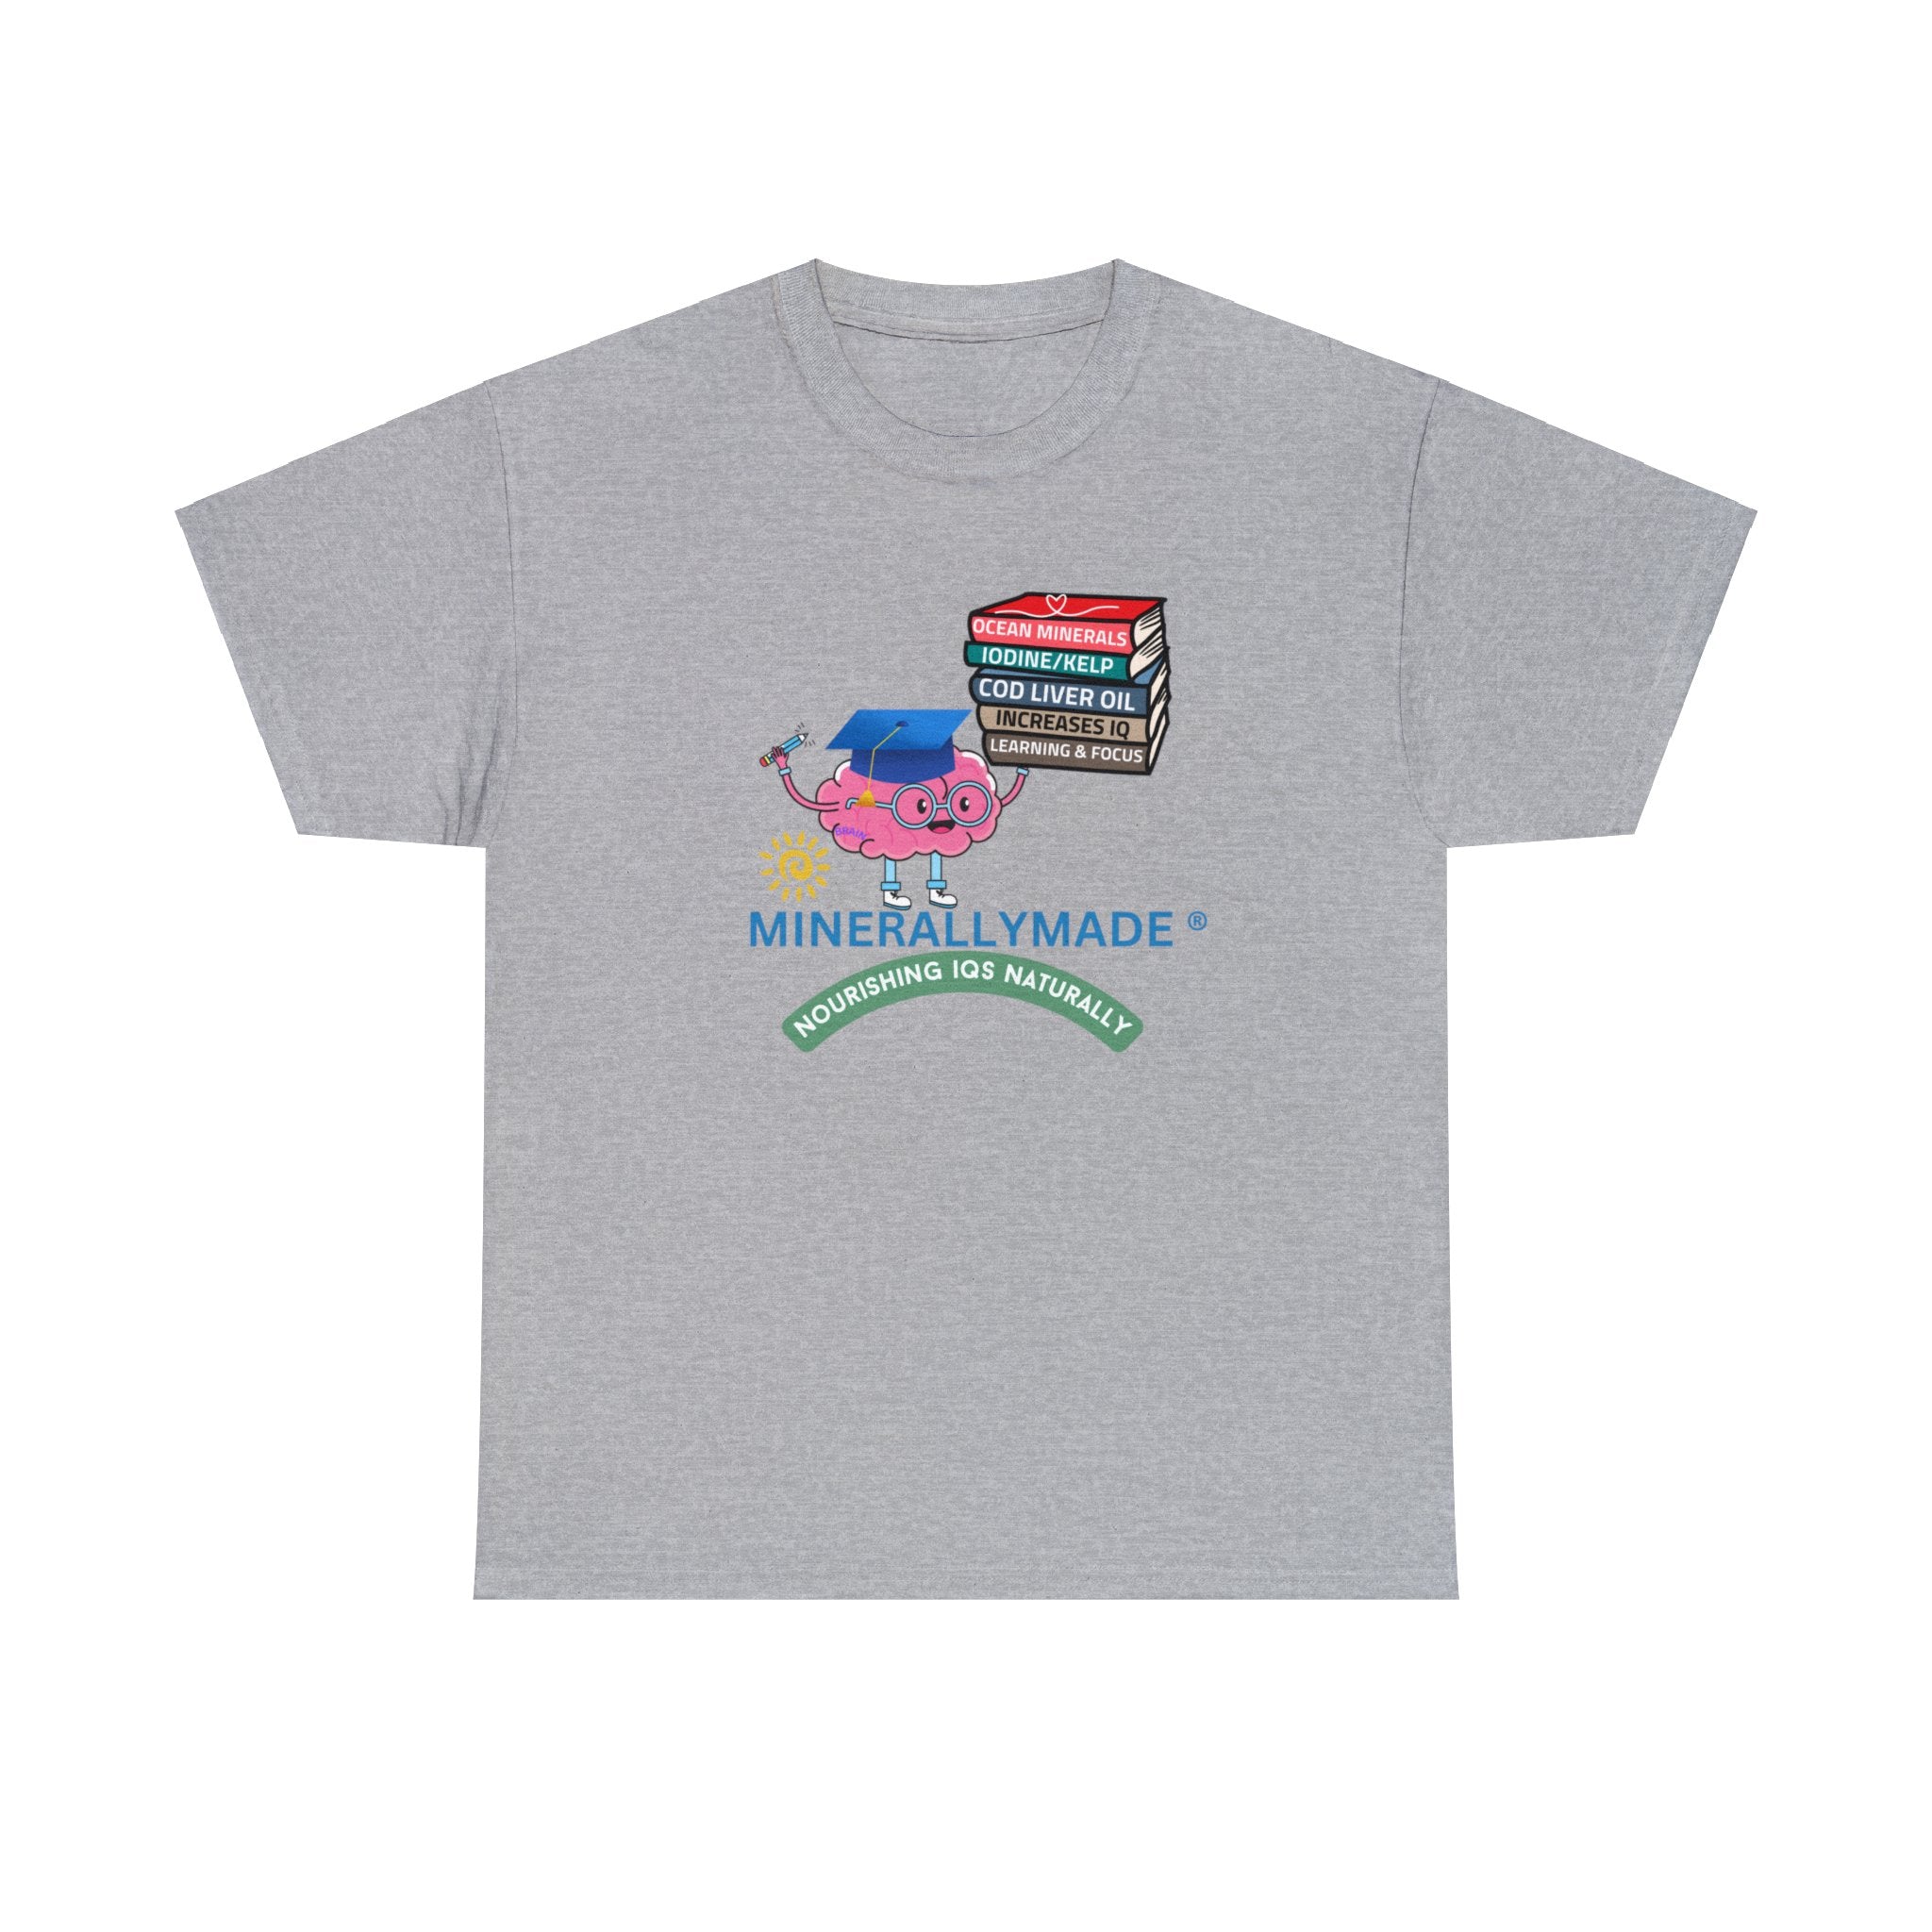 Minerallymade | Nourishing IQs Naturally | Unisex Heavy Cotton Tshirt